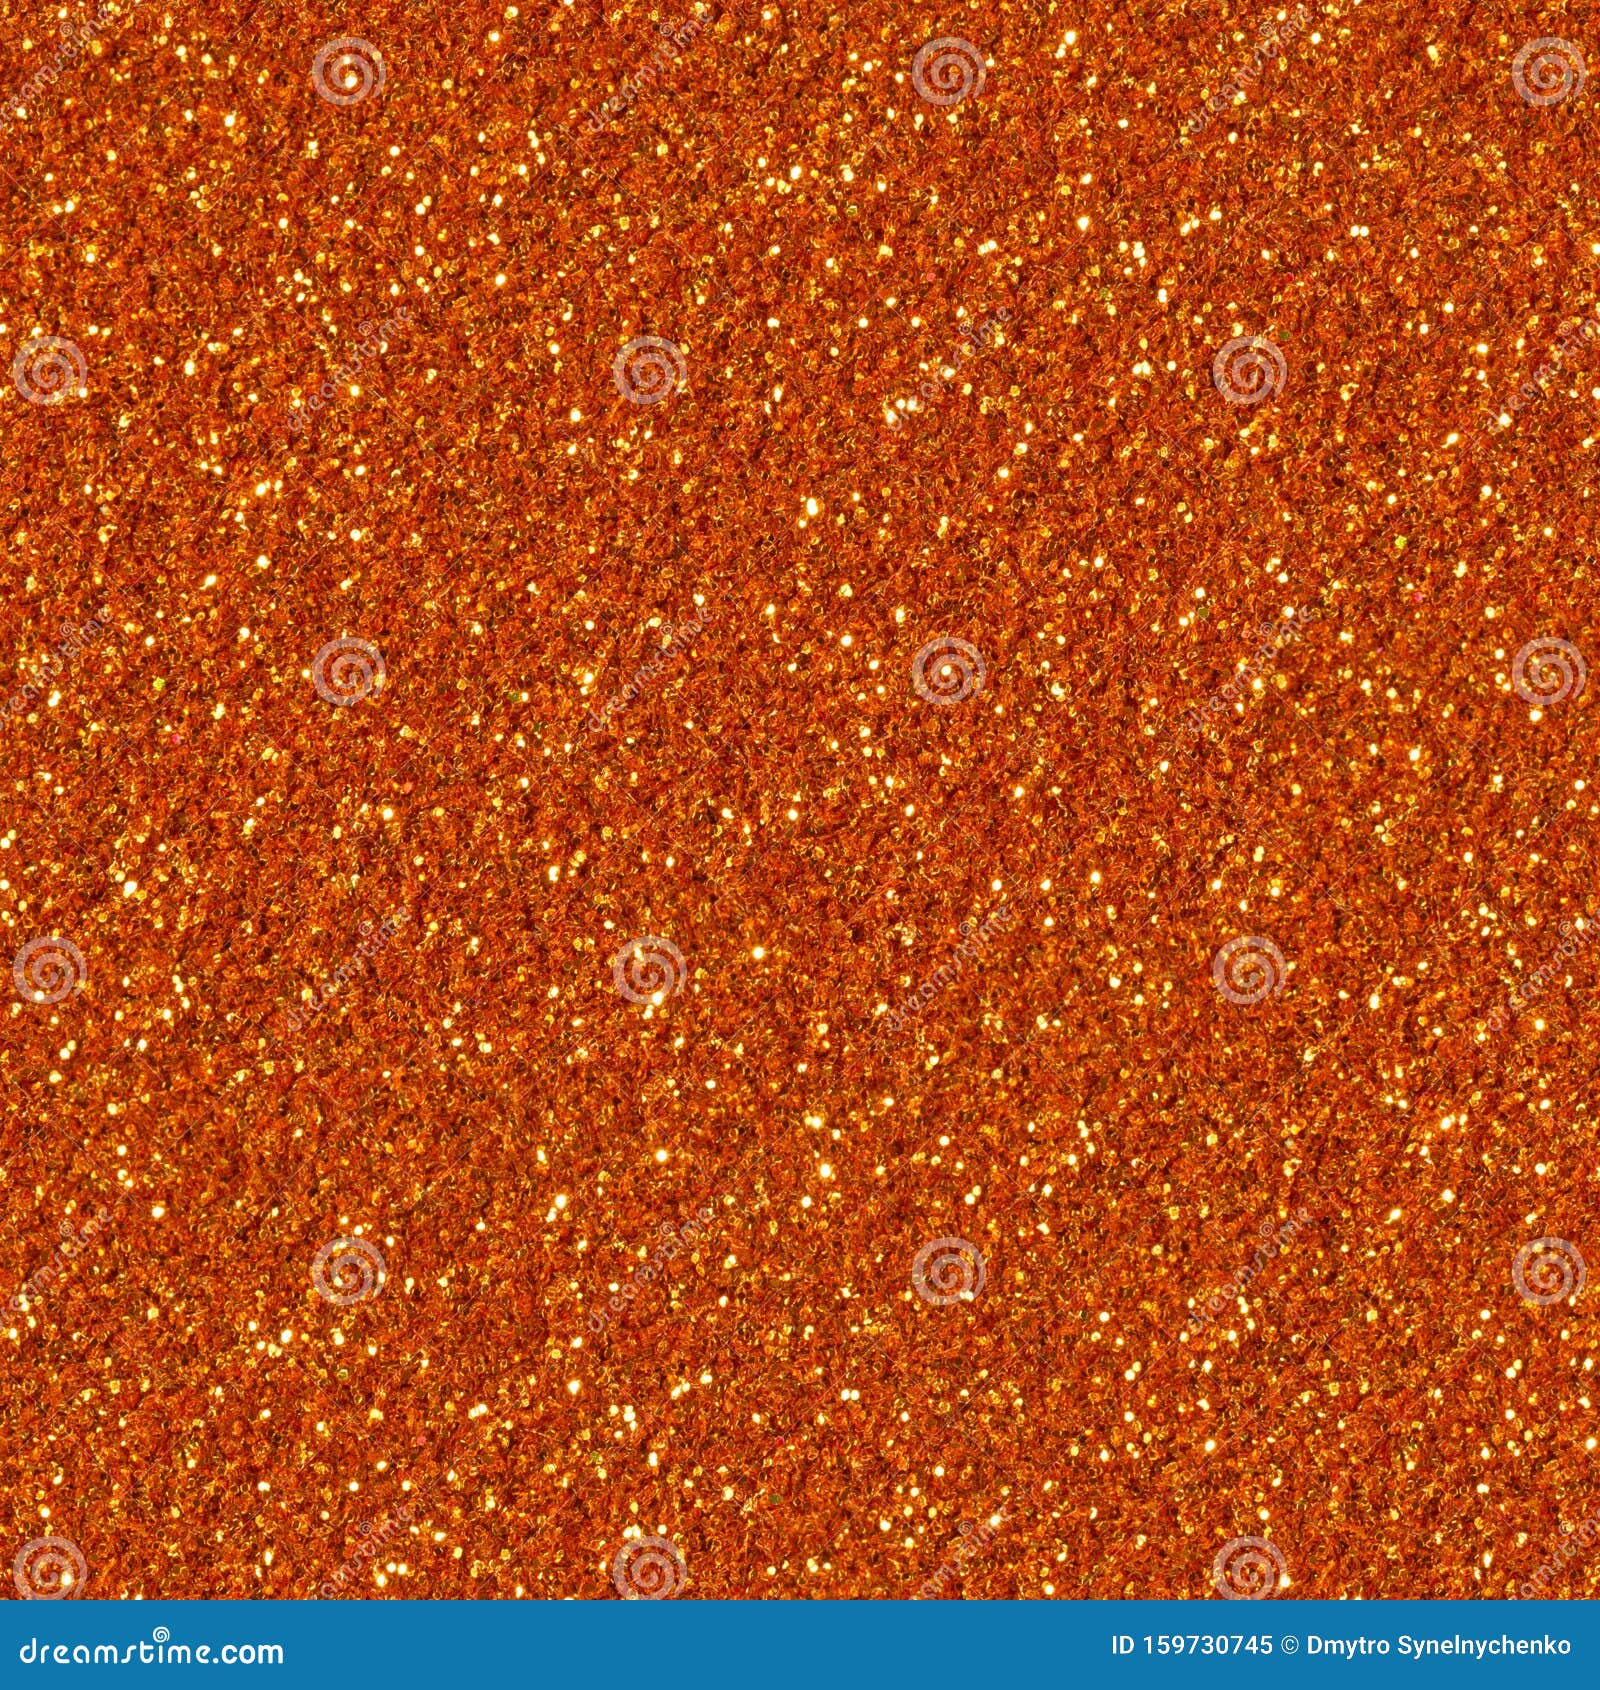 safron, orange glitter texture christmas background. seamless square texture.